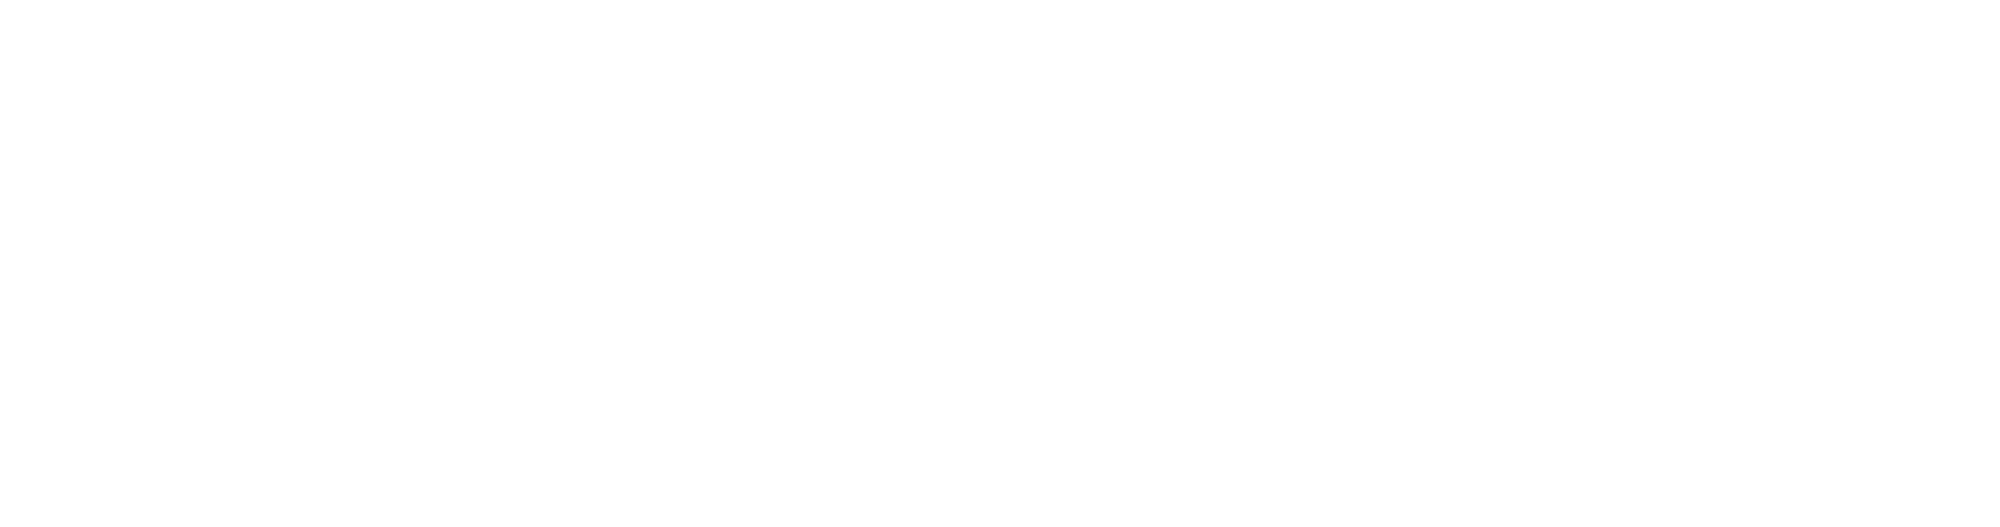 watchdog-full-logo-protera-white-02